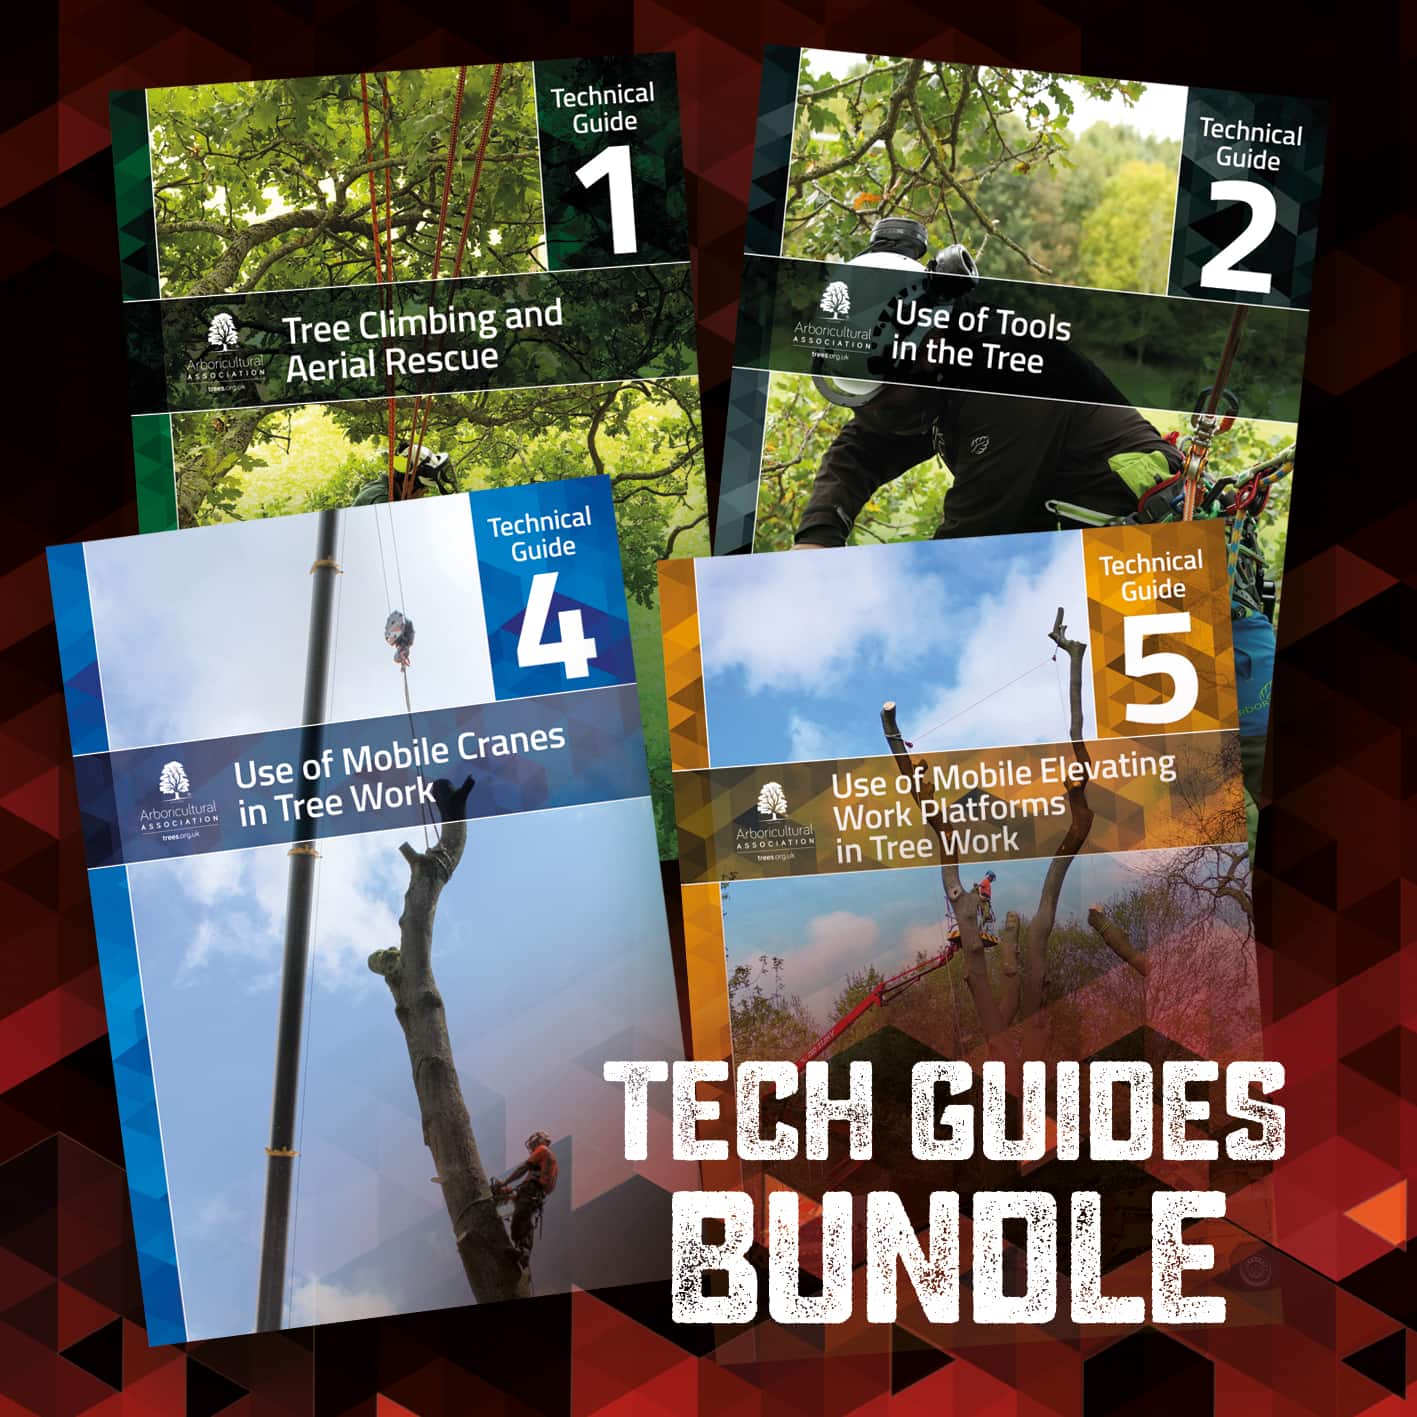 Technical Guide Pre-order Bundle Offer